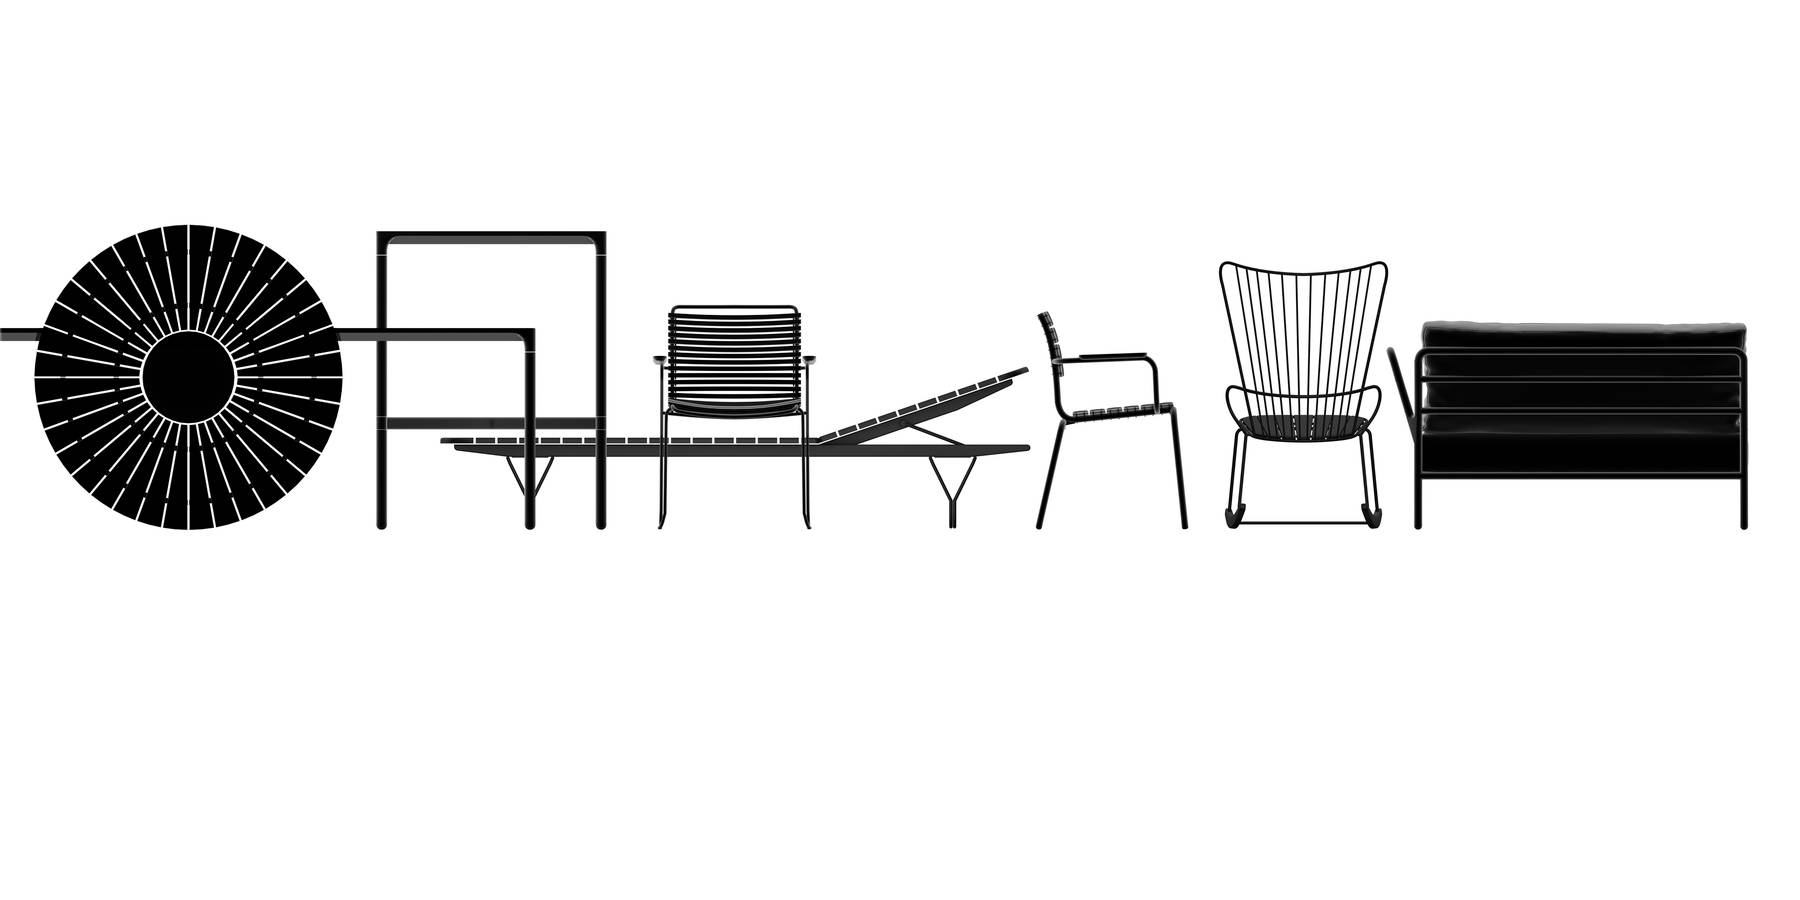 Click Lounge Chair - Paprika